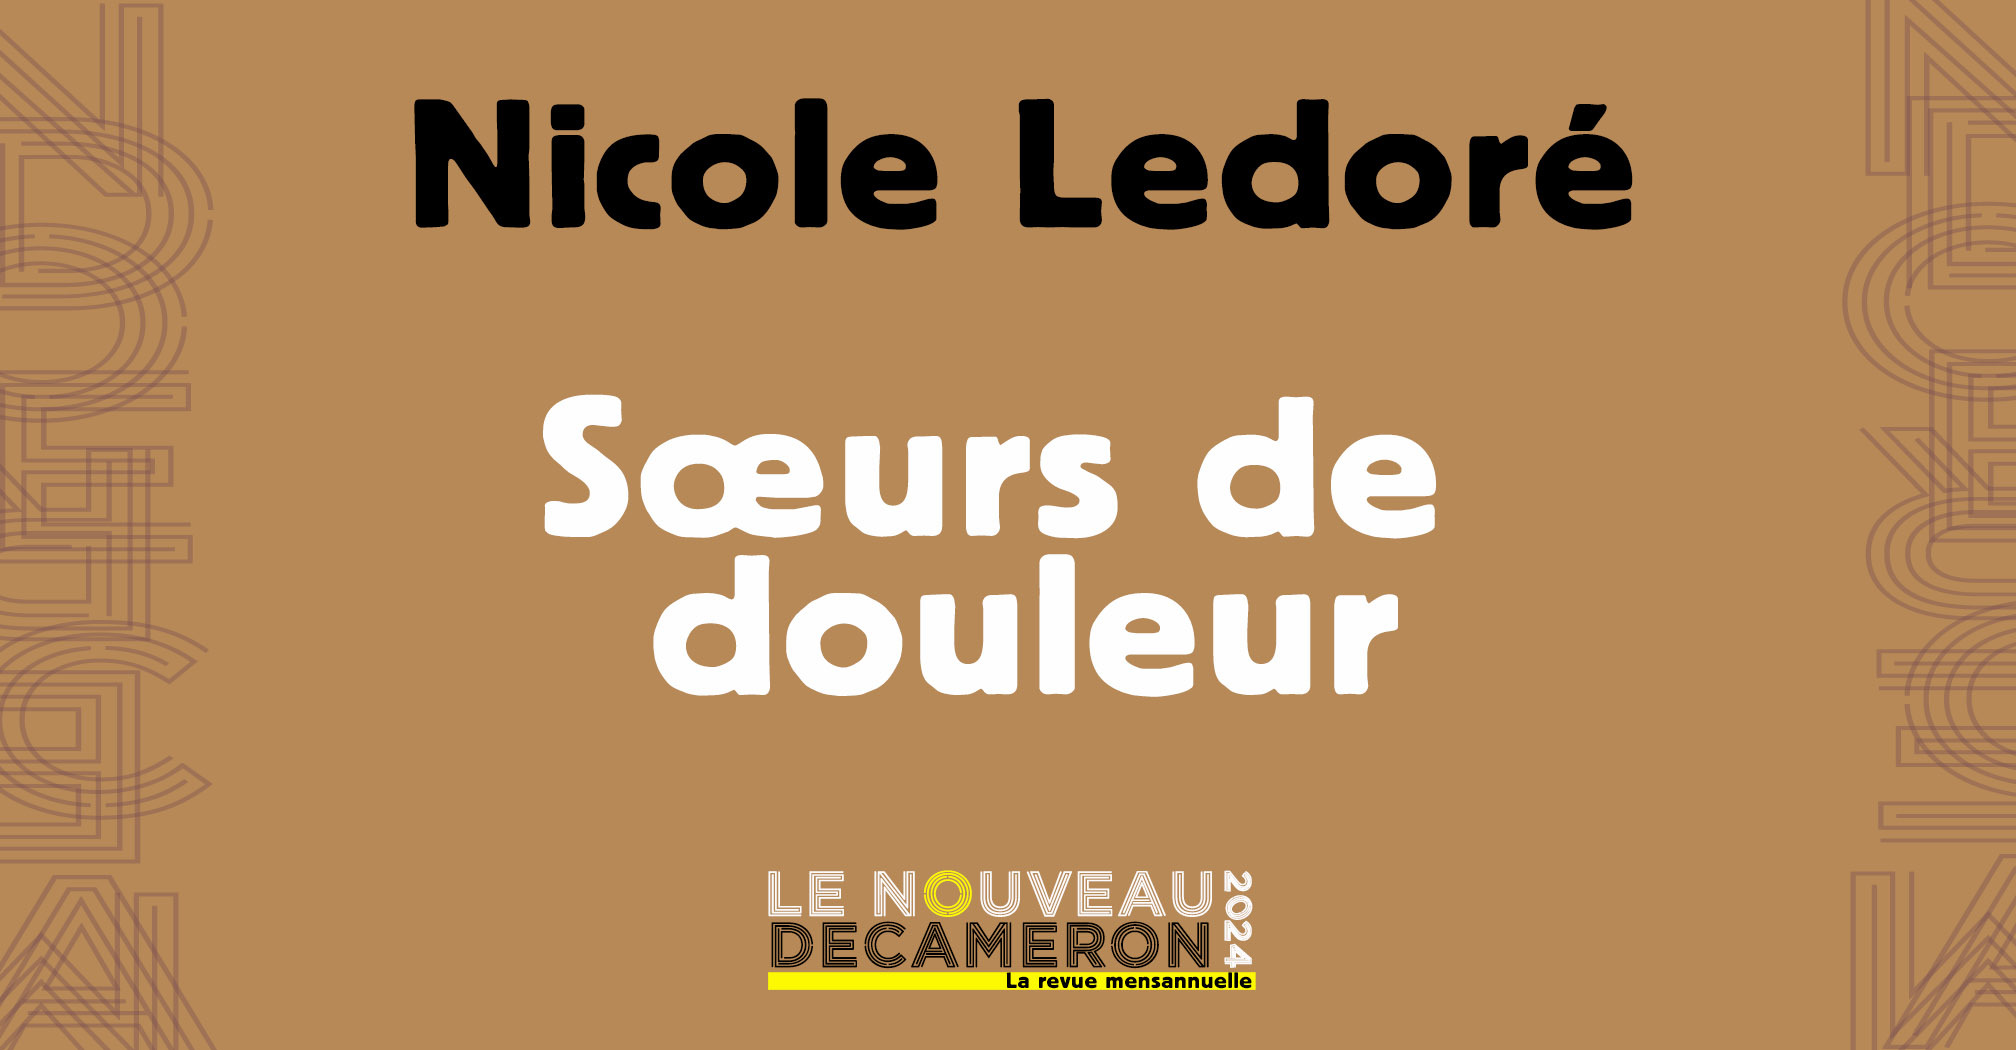 Nicole Ledoré - Un cri d'espoir